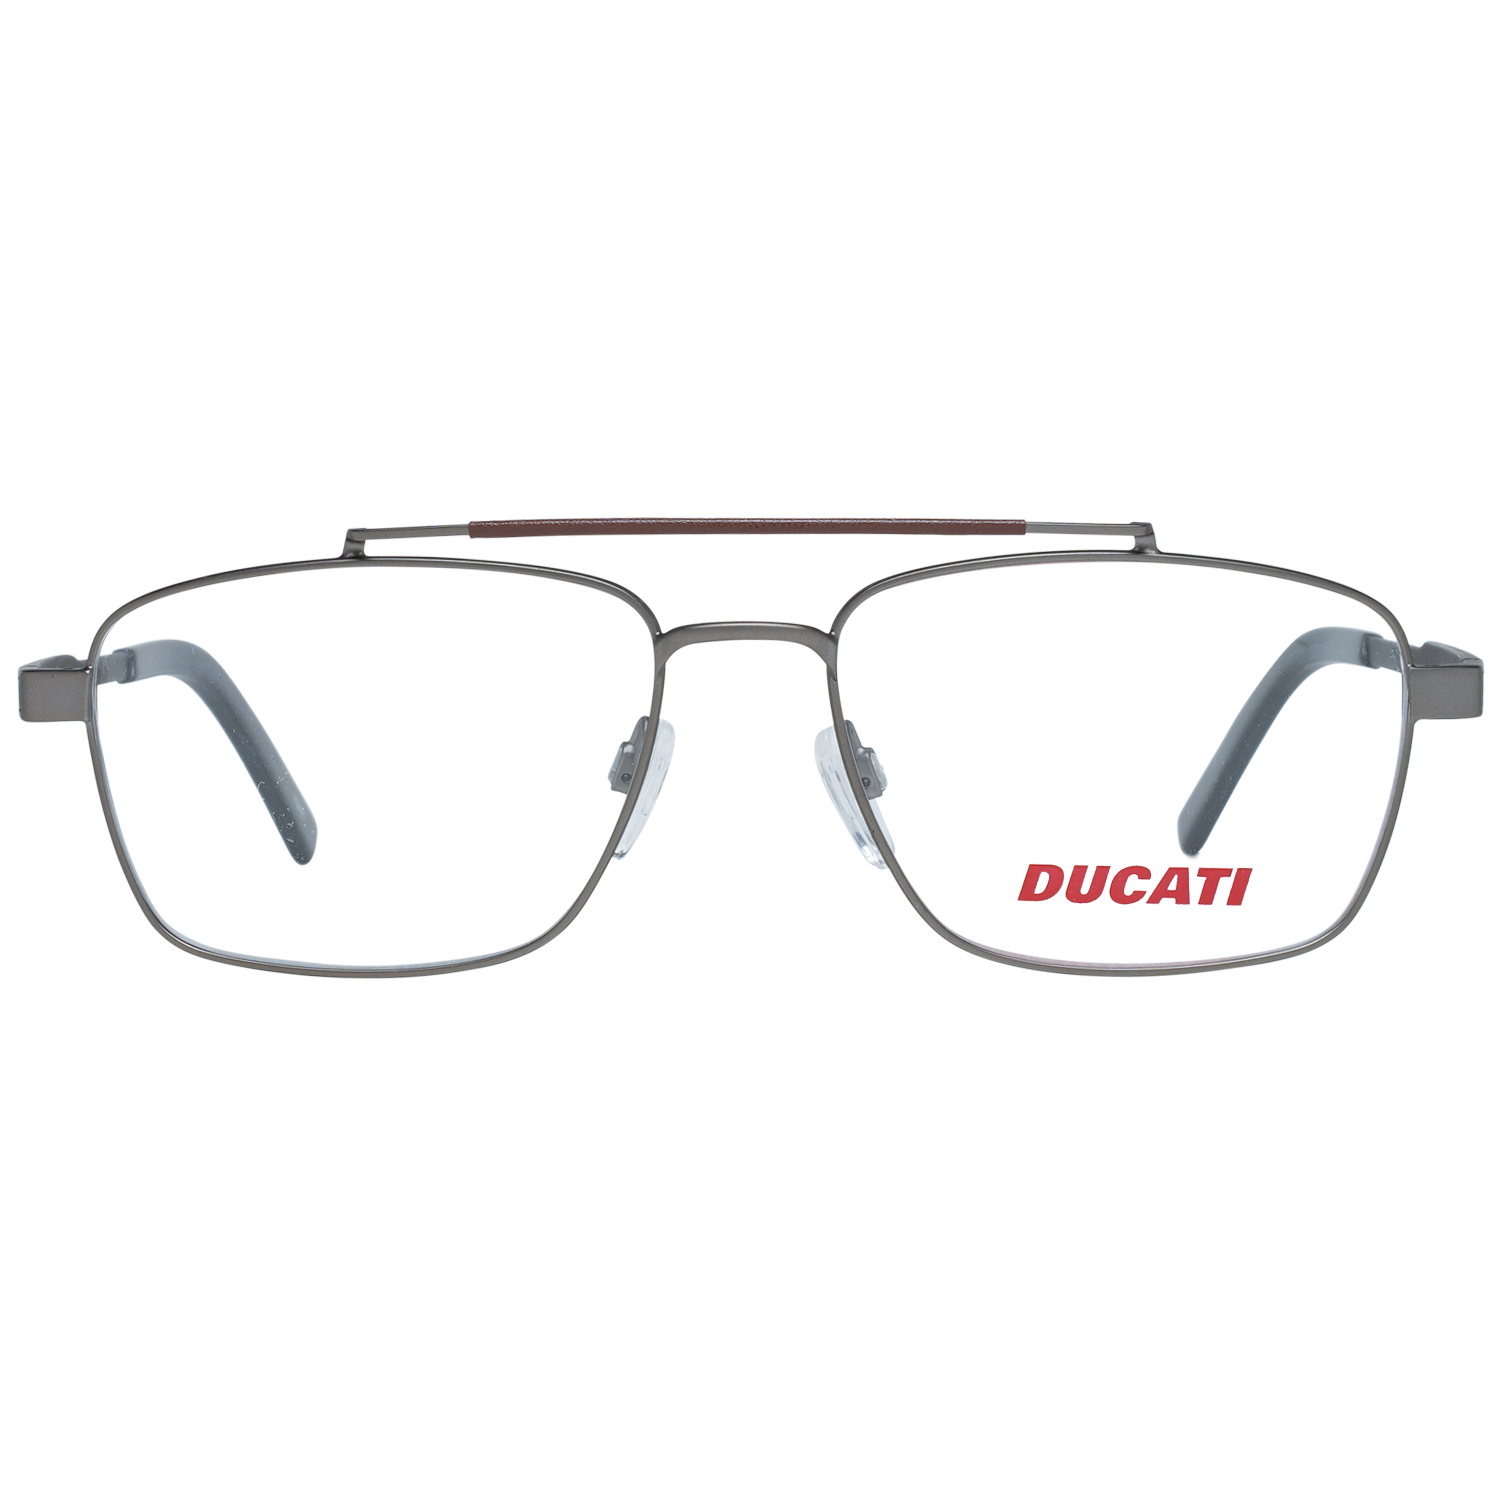 Ducati Frames Ducati Optical Frame DA3019 920 54 Eyeglasses Eyewear UK USA Australia 